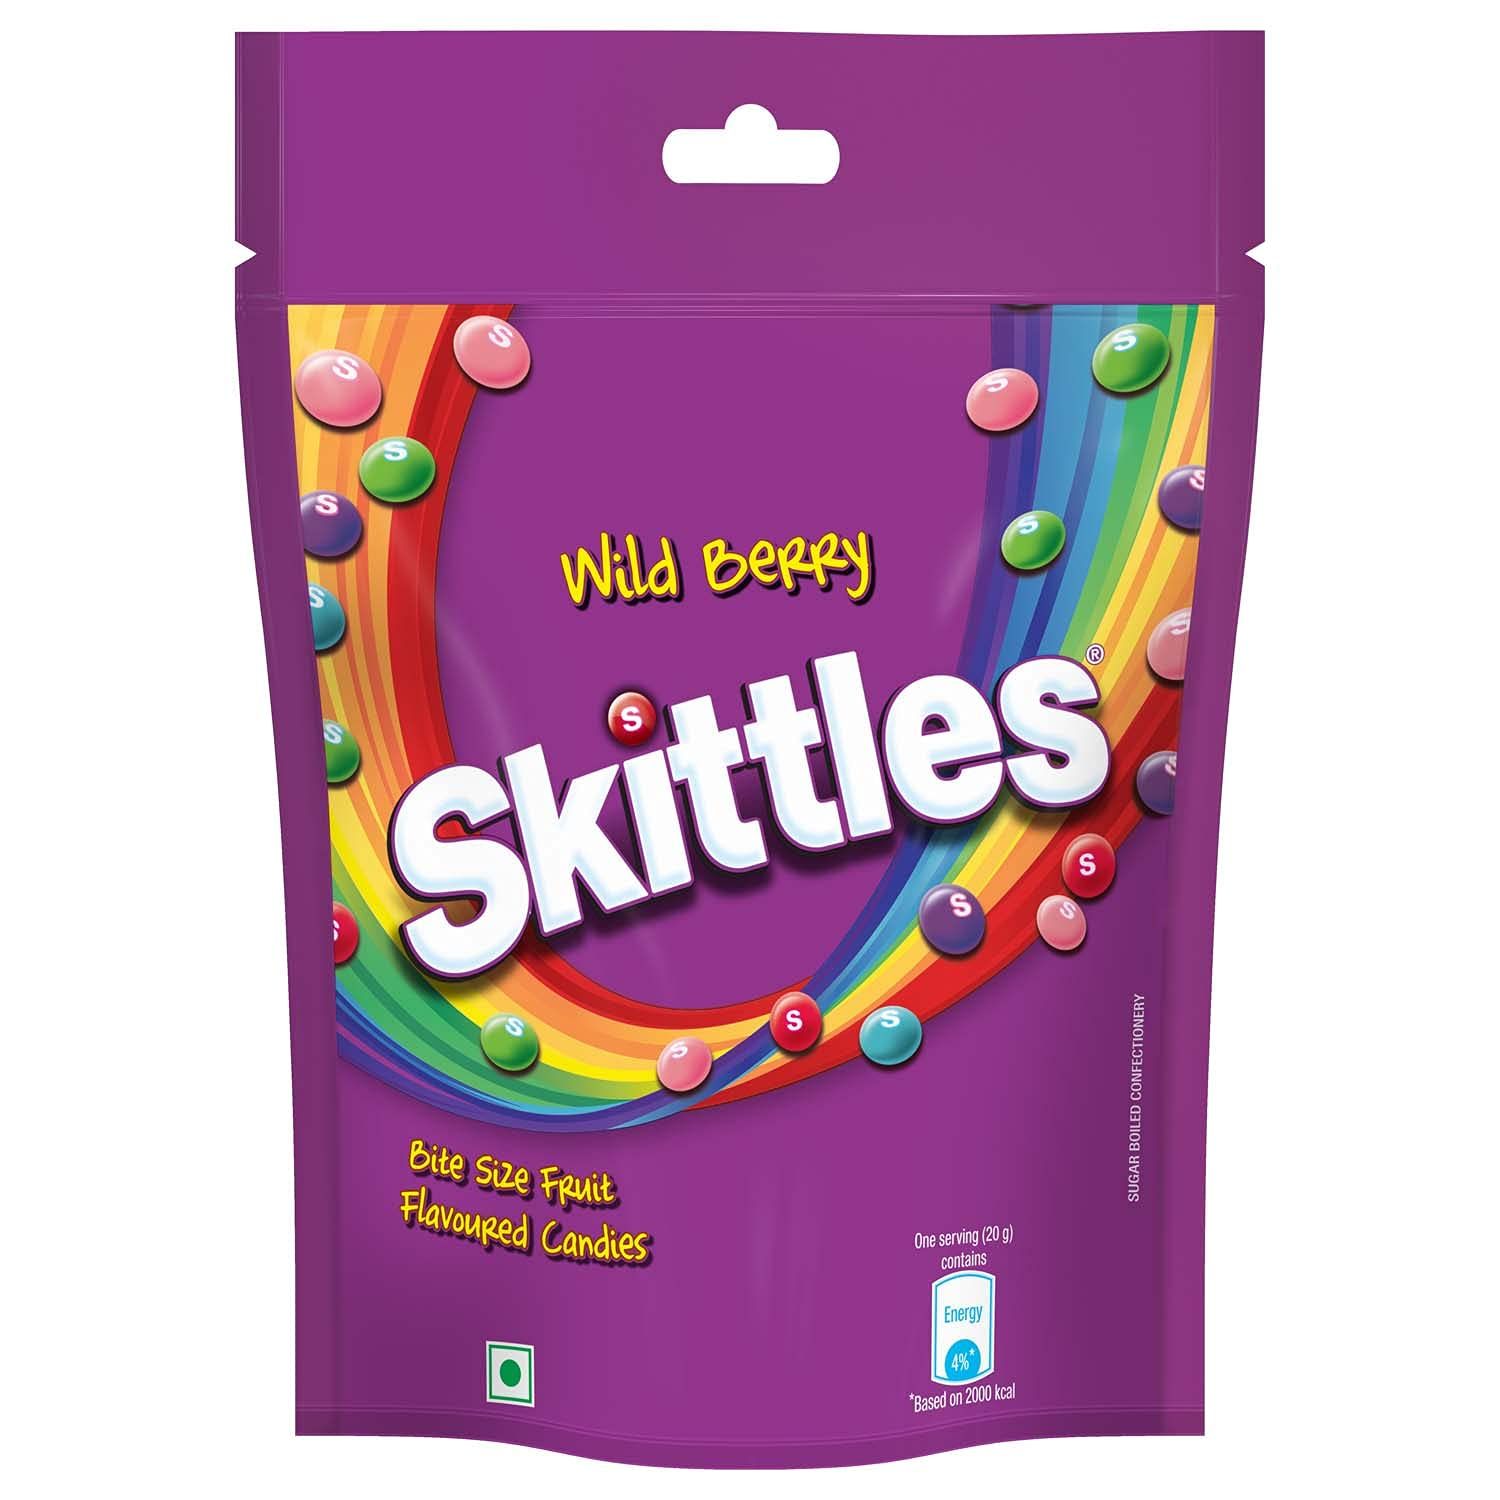 Skittles Wild Berry Candies Image